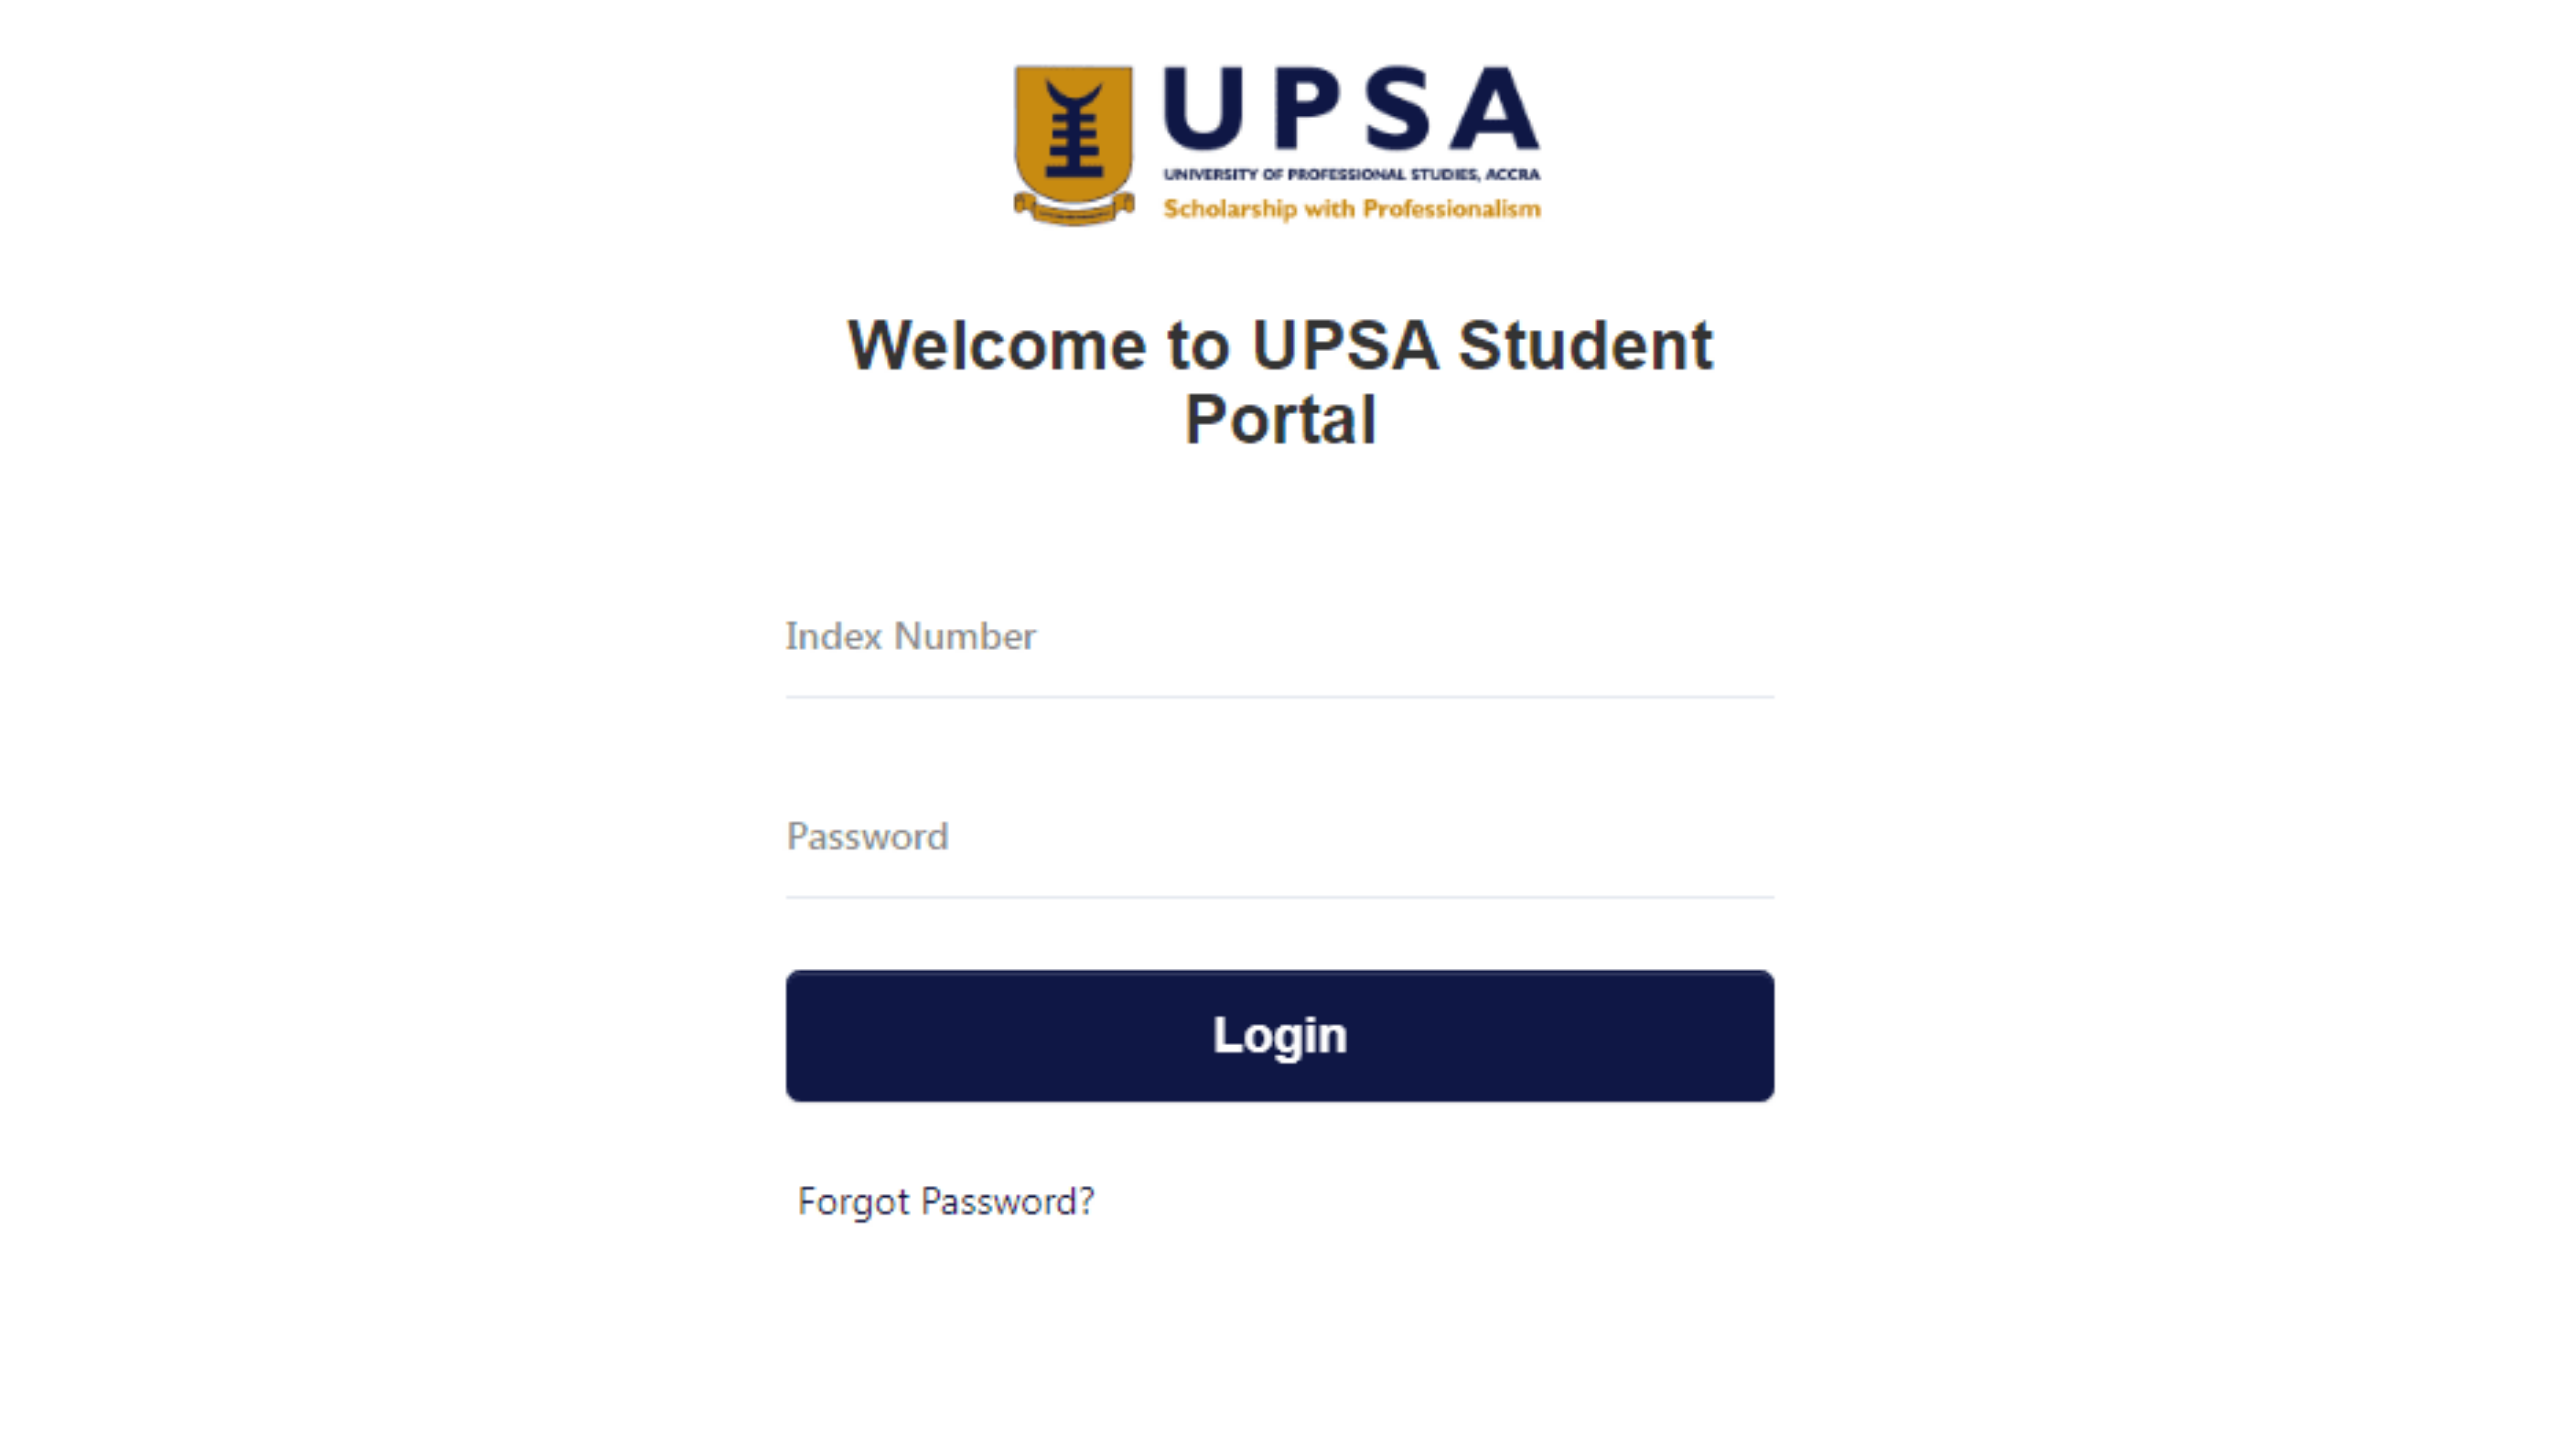 UPSA Student Portal